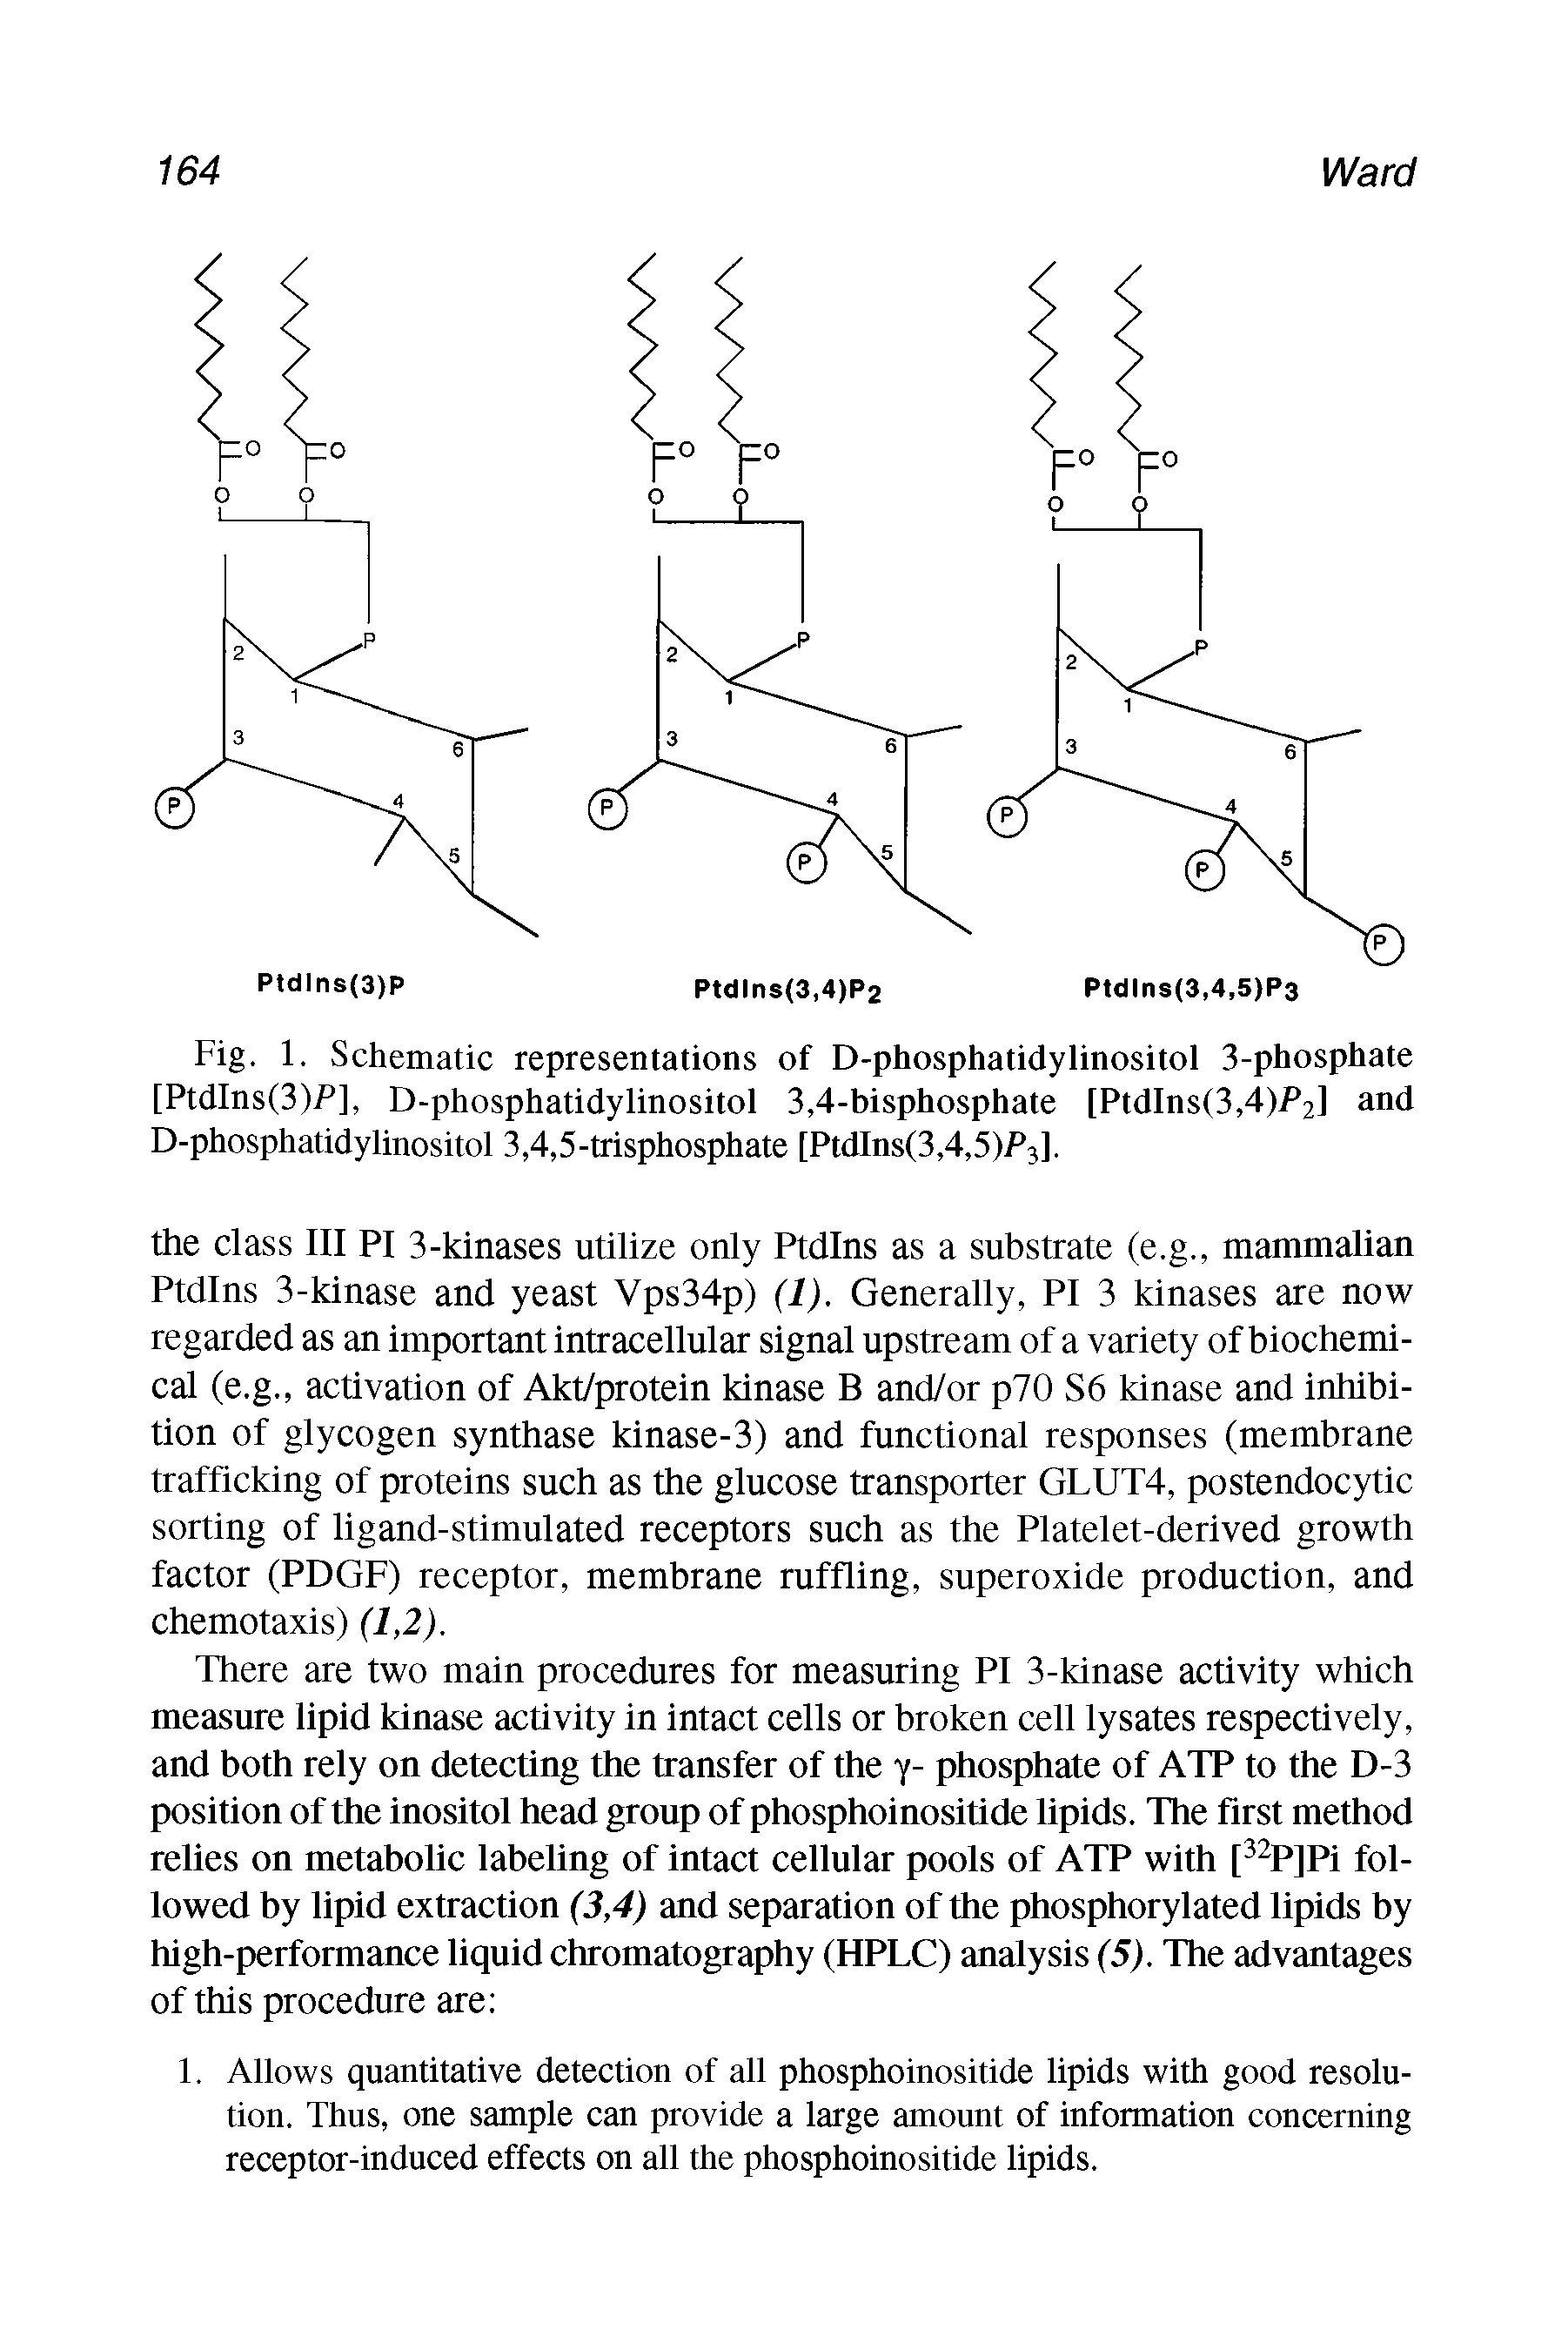 Fig. 1. Schematic representations of D-phosphatidylinositol 3-phosphate [PtdIns(3)P], D-phosphatidylinositol 3,4-bisphosphate [PtdIns(3,4)P2] and D-phosphatidylinositol 3,4,5-trisphosphate [PtdIns(3,4,5)P3].